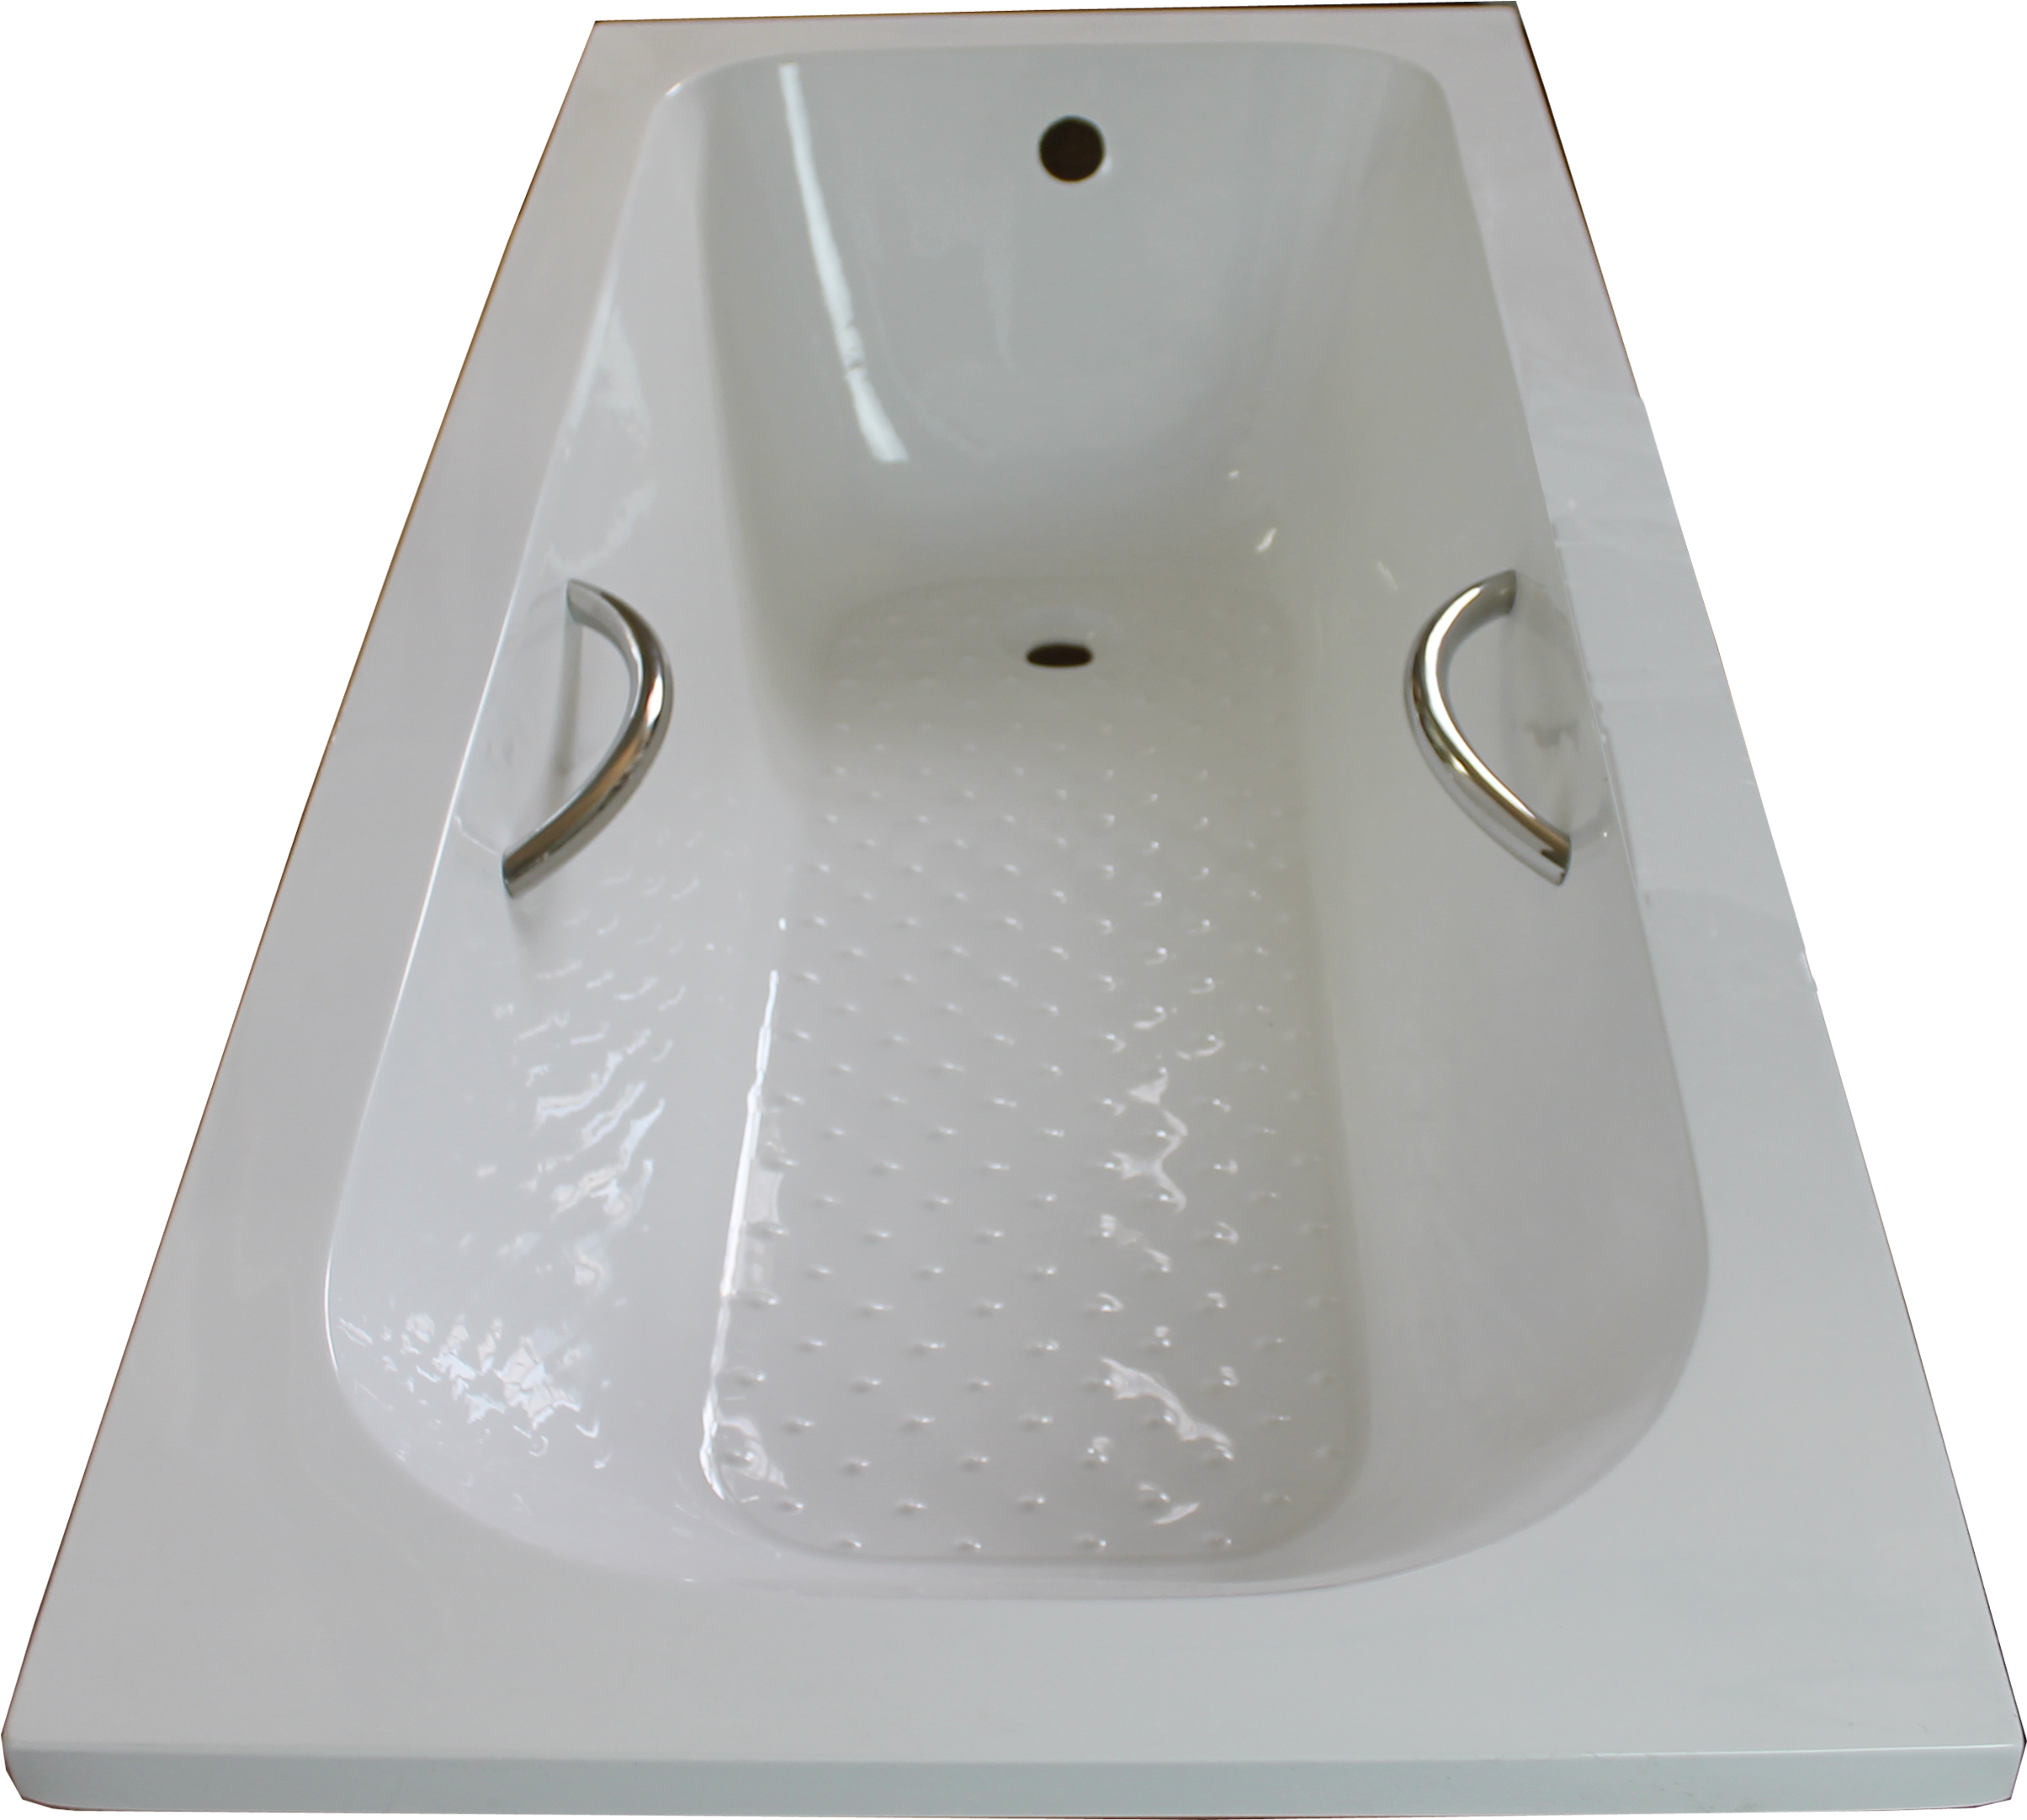 White Ceramic Bathroom Sink With Handles